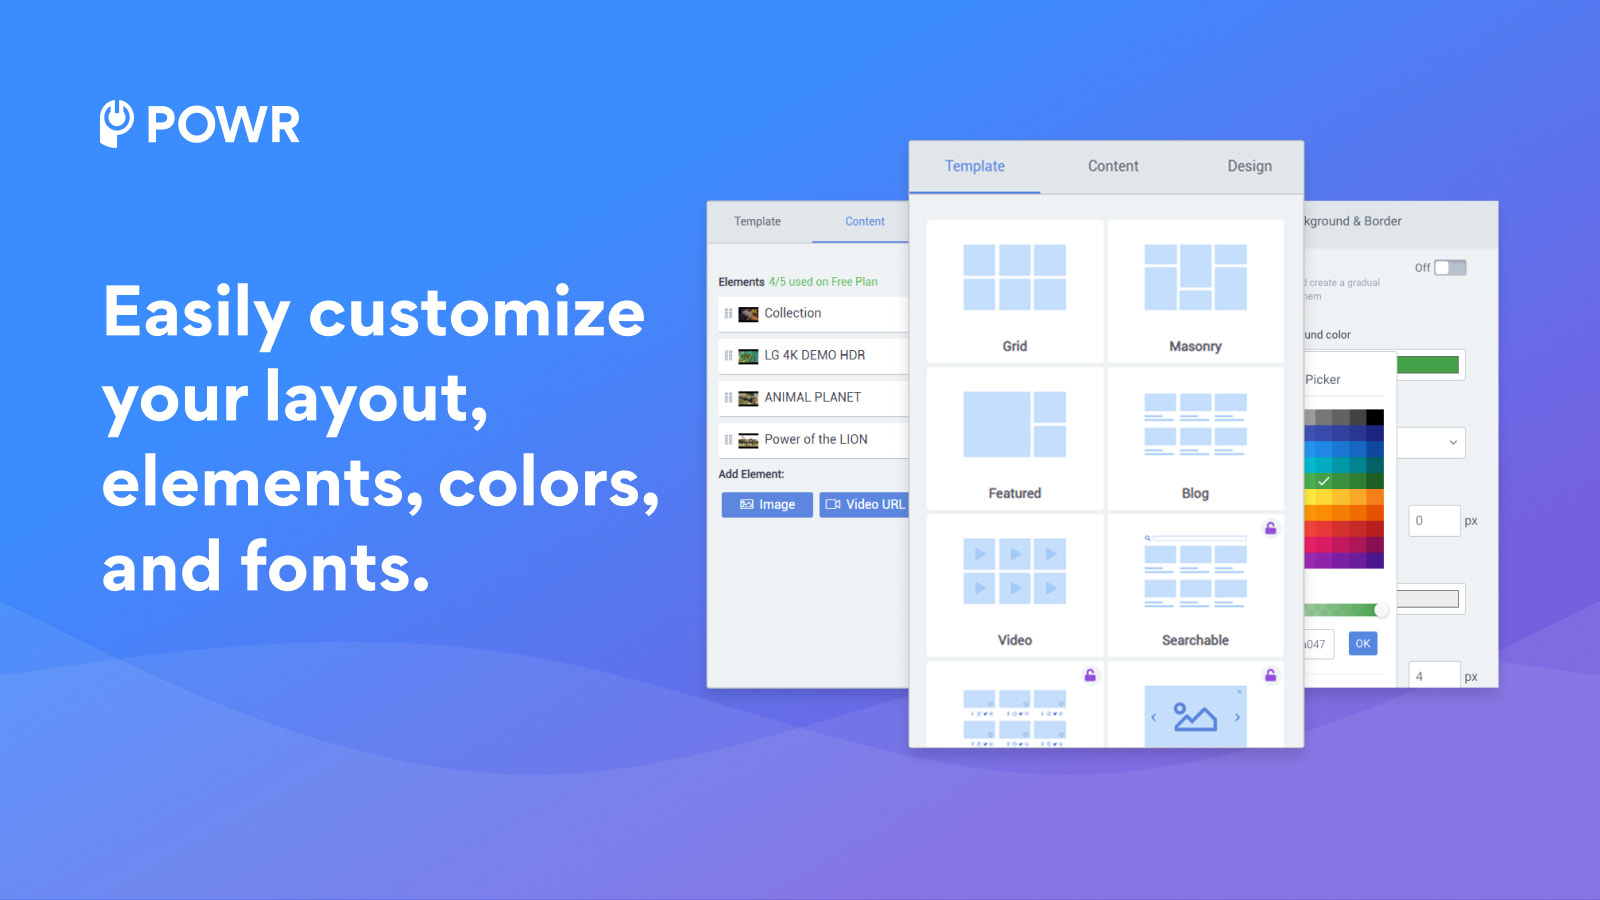 Personalize facilmente seu layout, elementos, cores e fontes.